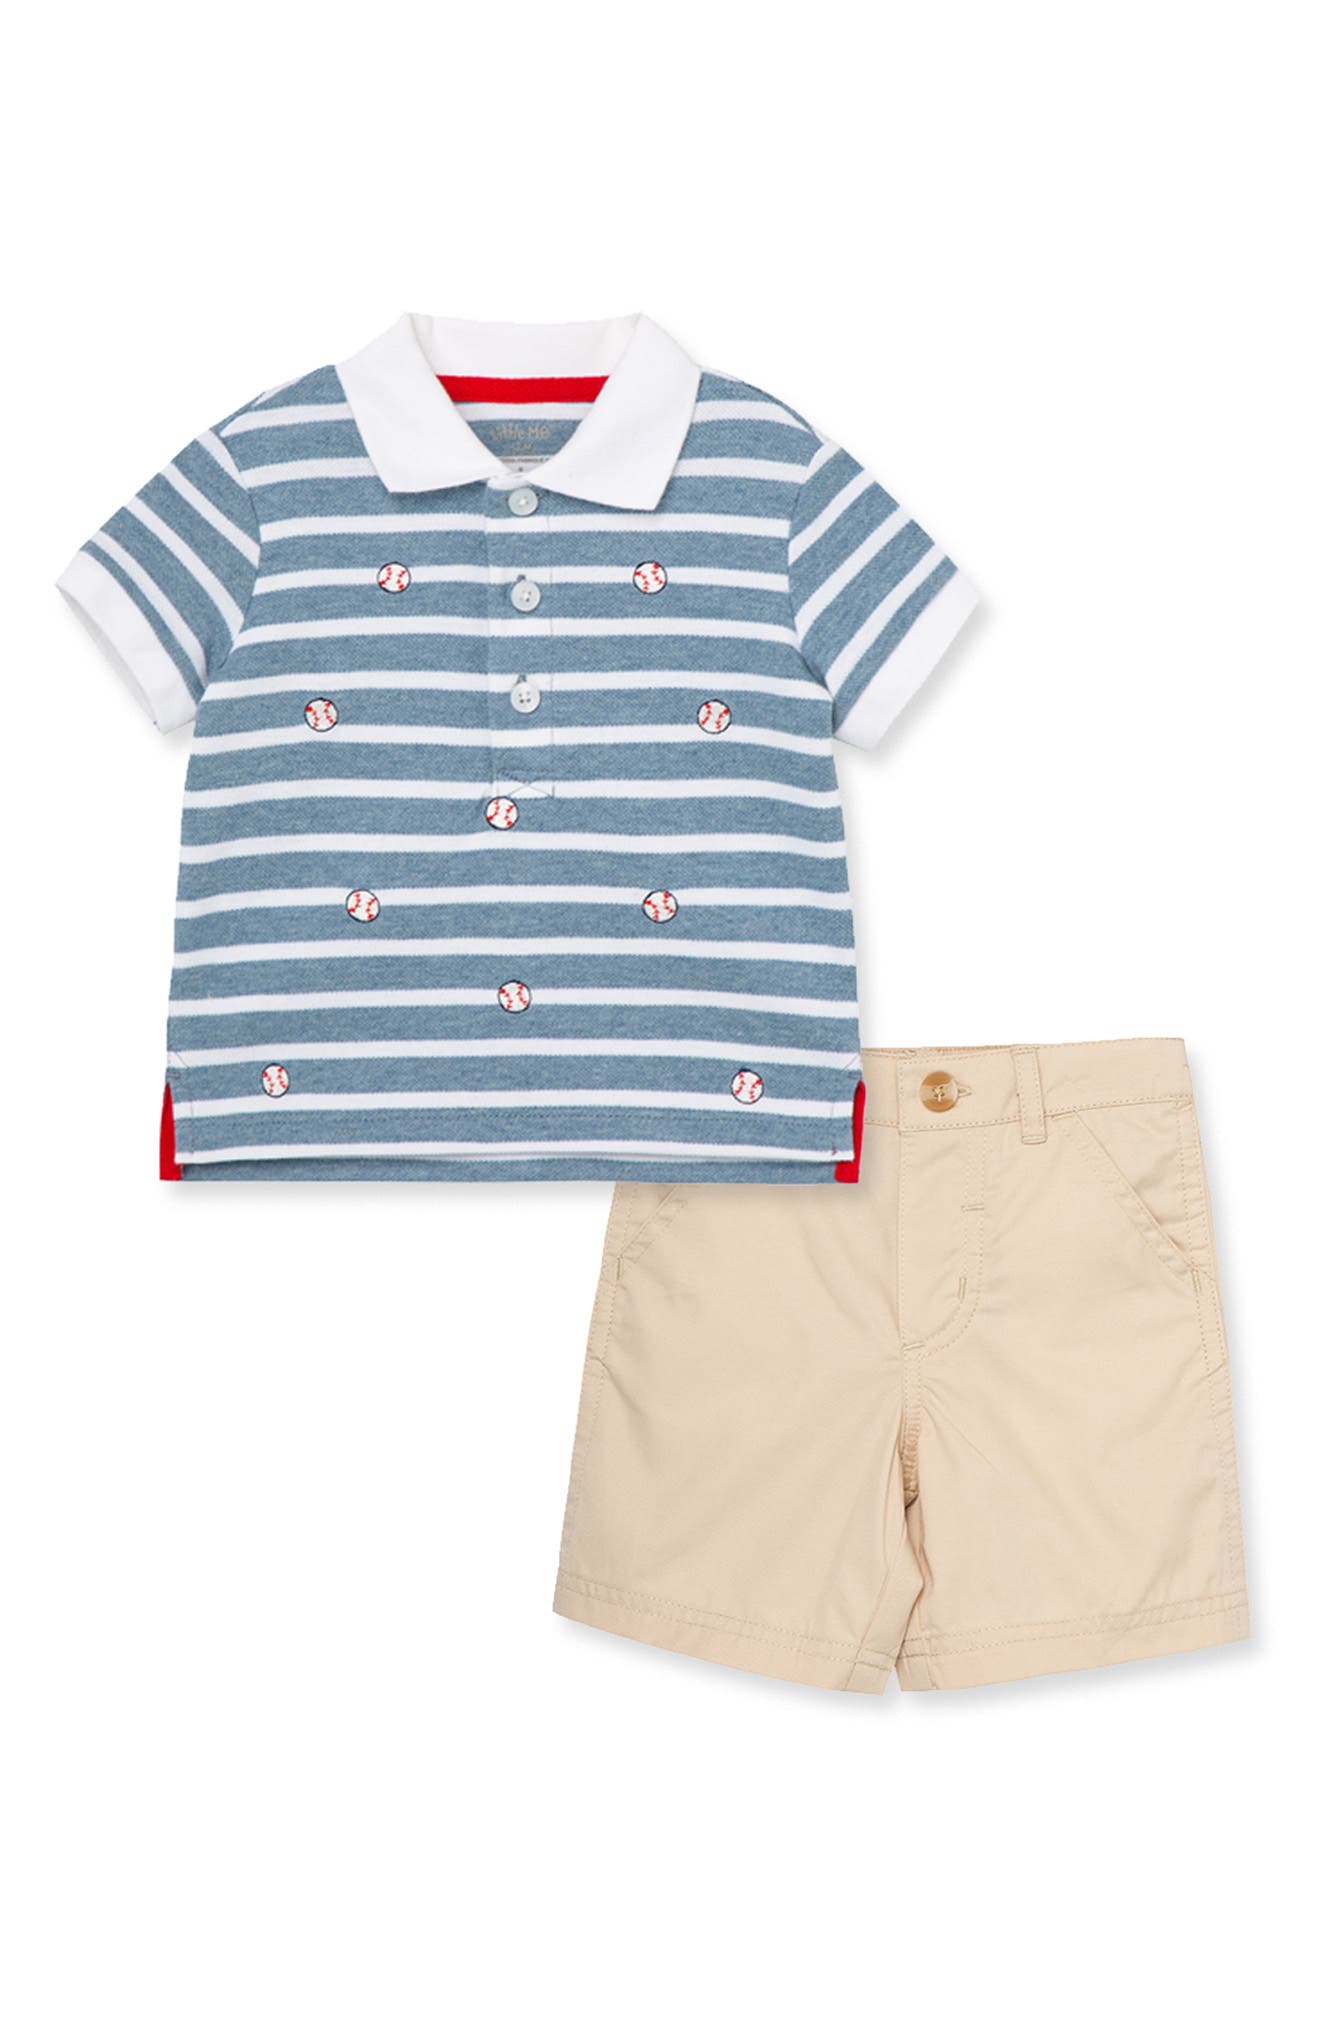 Nautica Baby Boys Henley Top W/ Shorts 24M Select SZ/Color. 